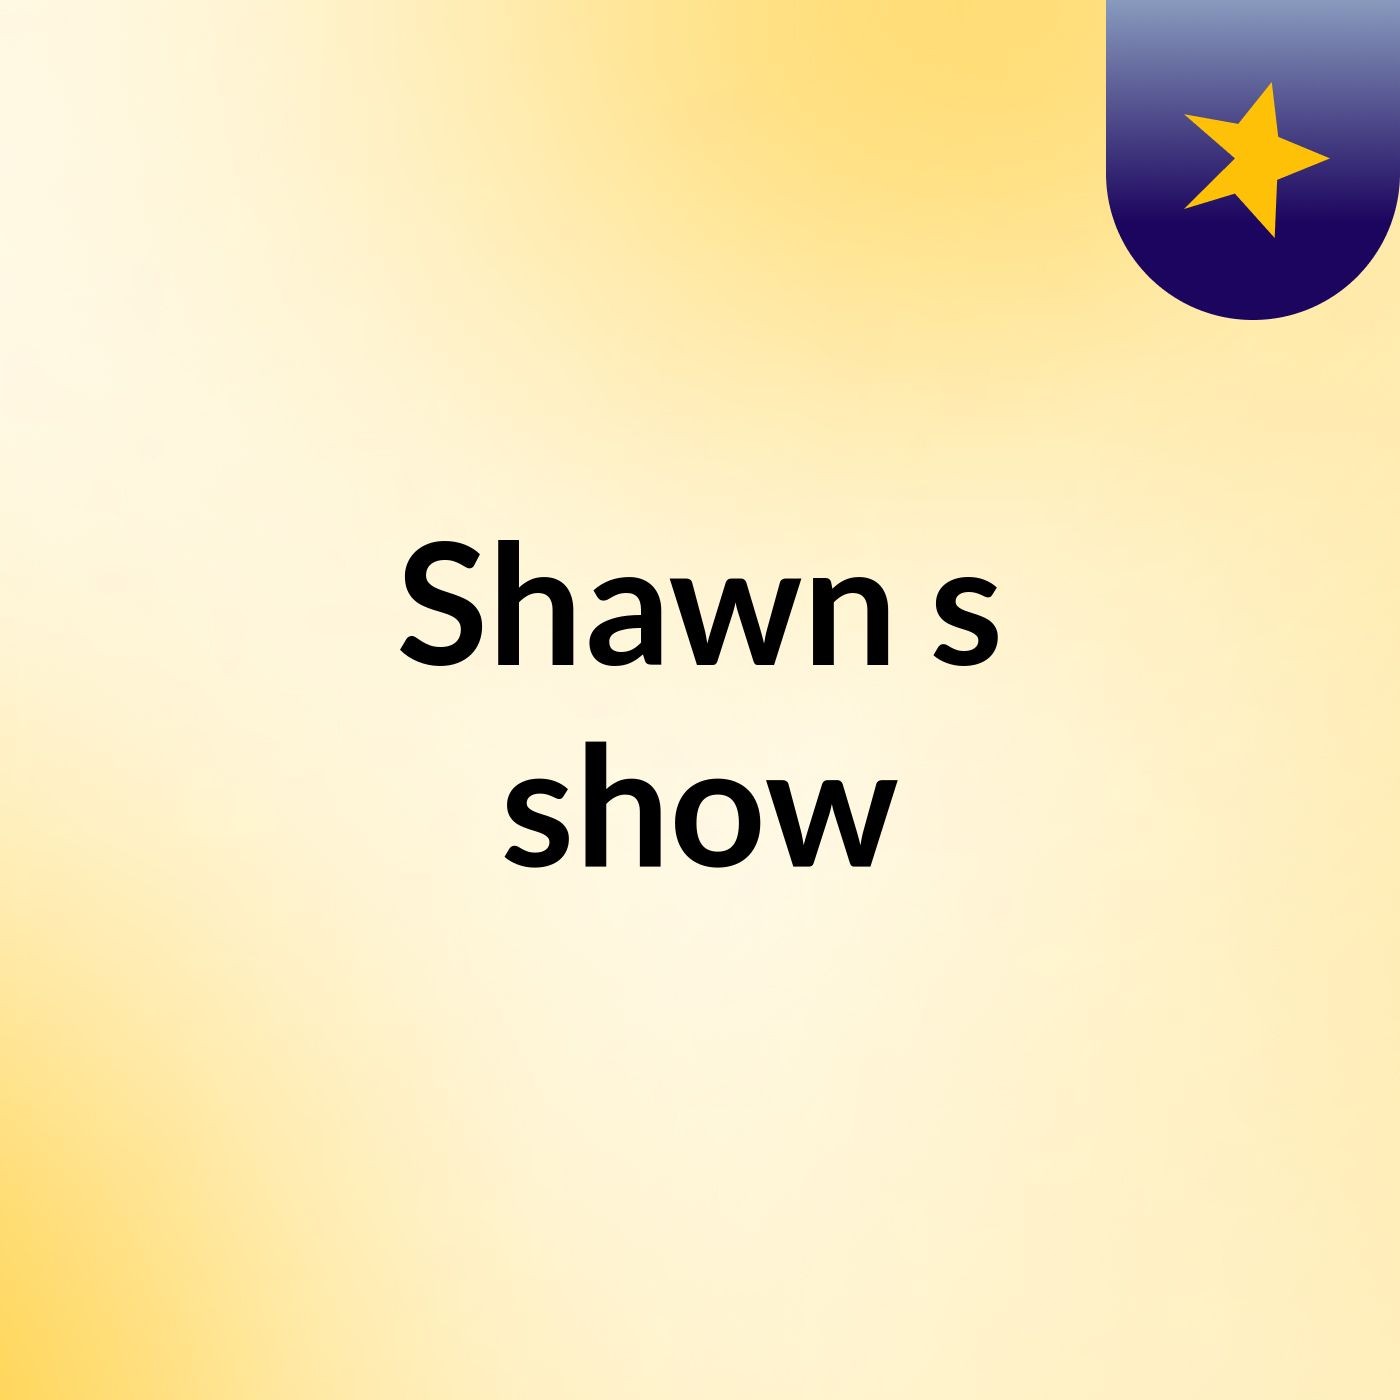 Shawn's show